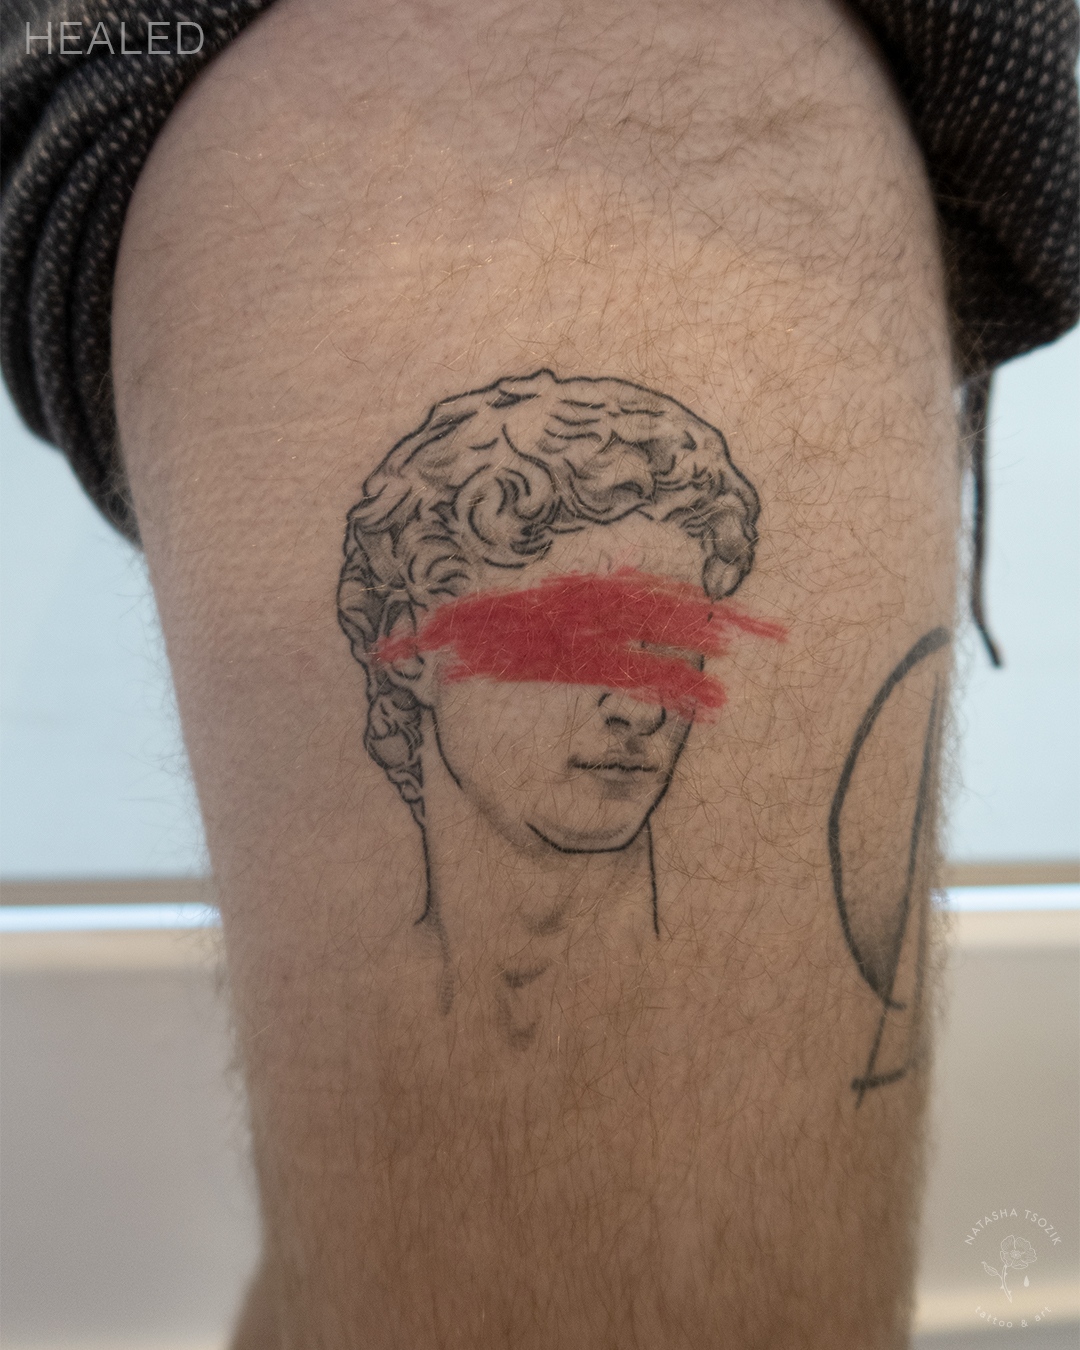 Healed-David-tattoo-by-Natasha-Tsozik